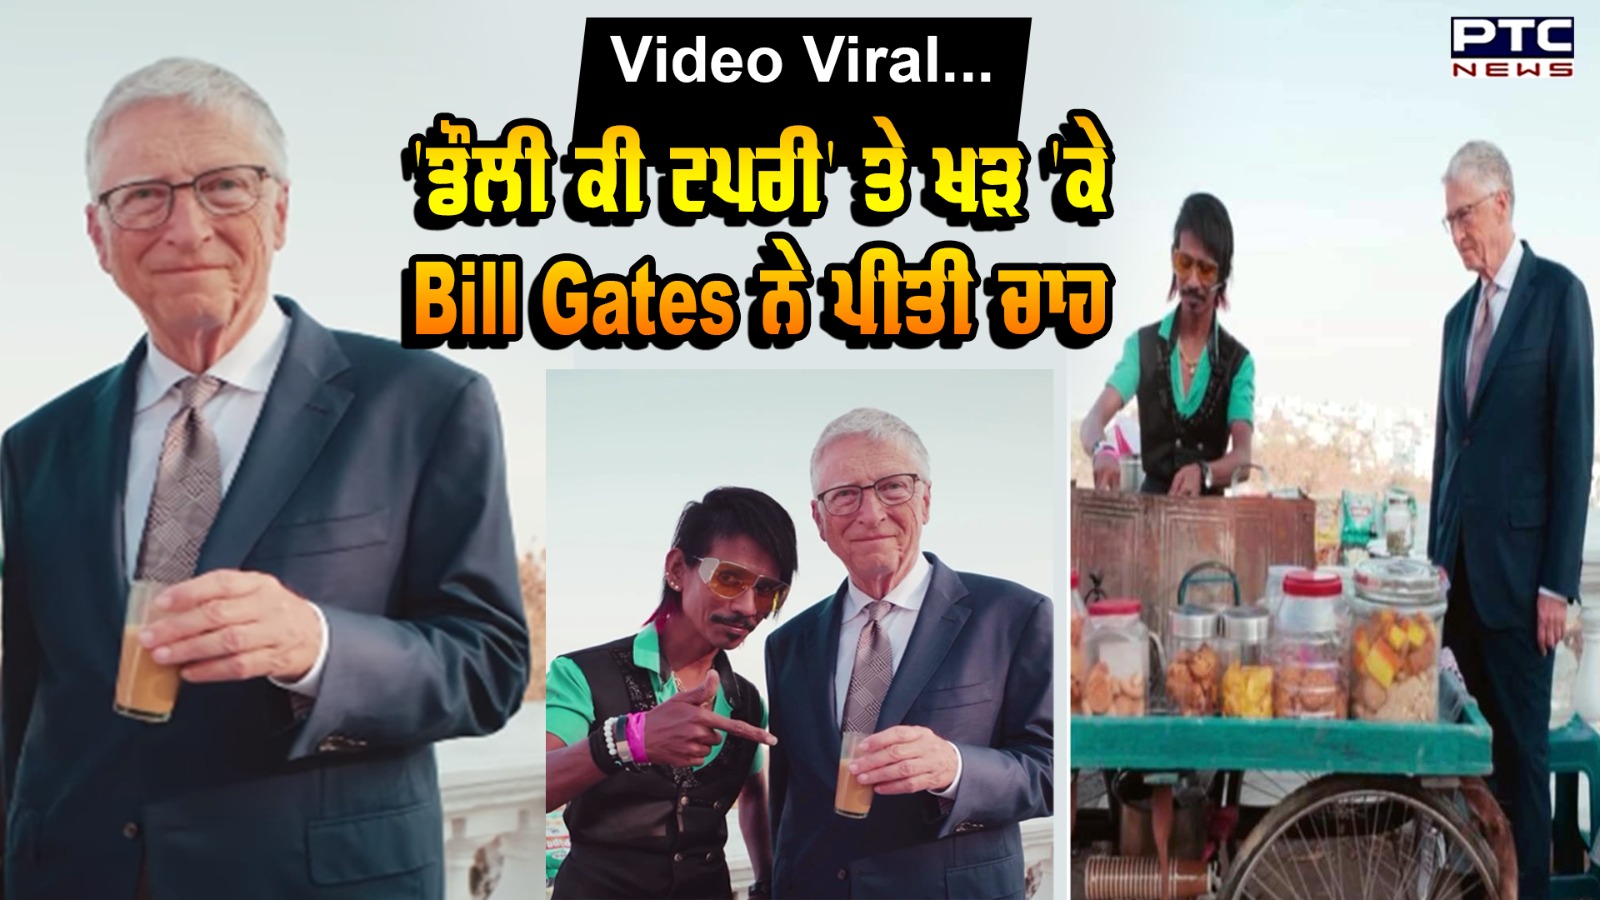 'Dolly Chaiwala' ਦੇ ਅੰਦਾਜ਼ ਦੇ ਮੁਰੀਦ ਹੋਏ Bill Gates